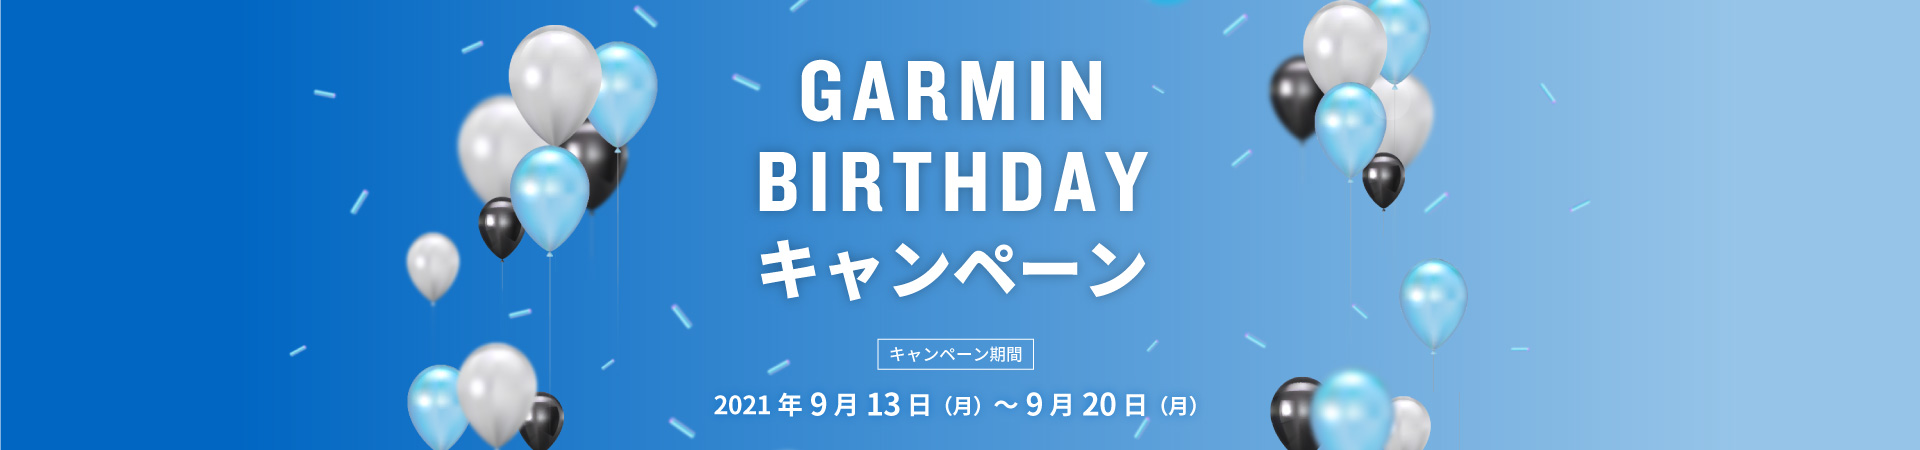 GARMIN BIRTHDAYキャンペーン